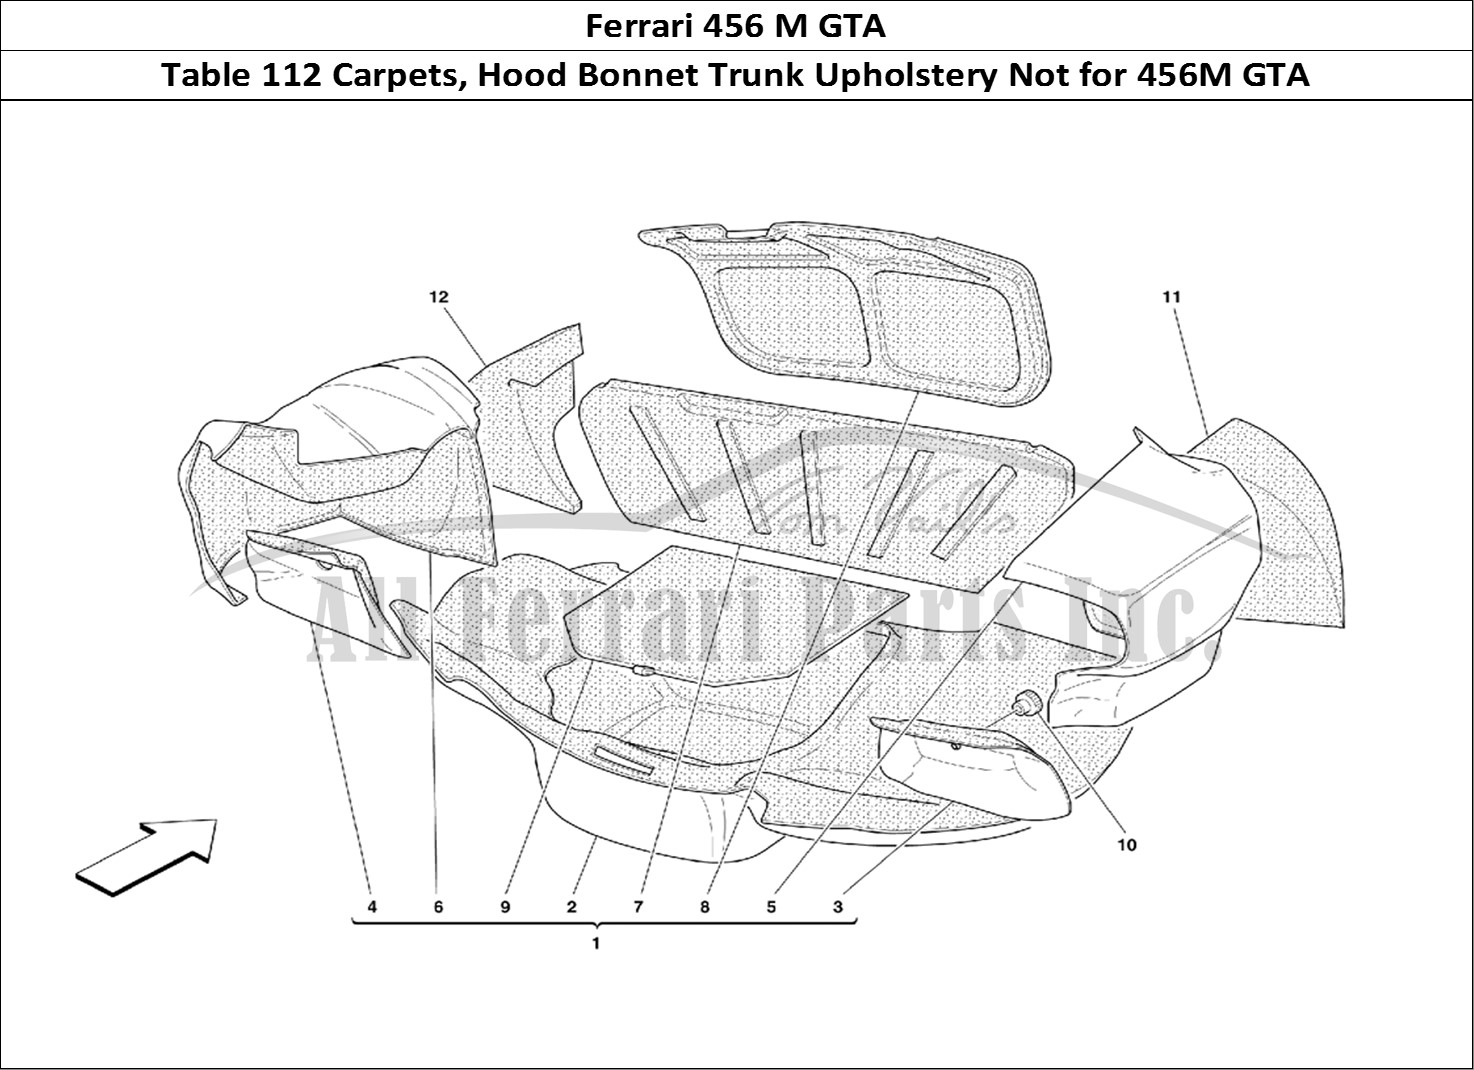 Ferrari Parts Ferrari 456 M GT Page 112 Trunk Hood Upholstery -No